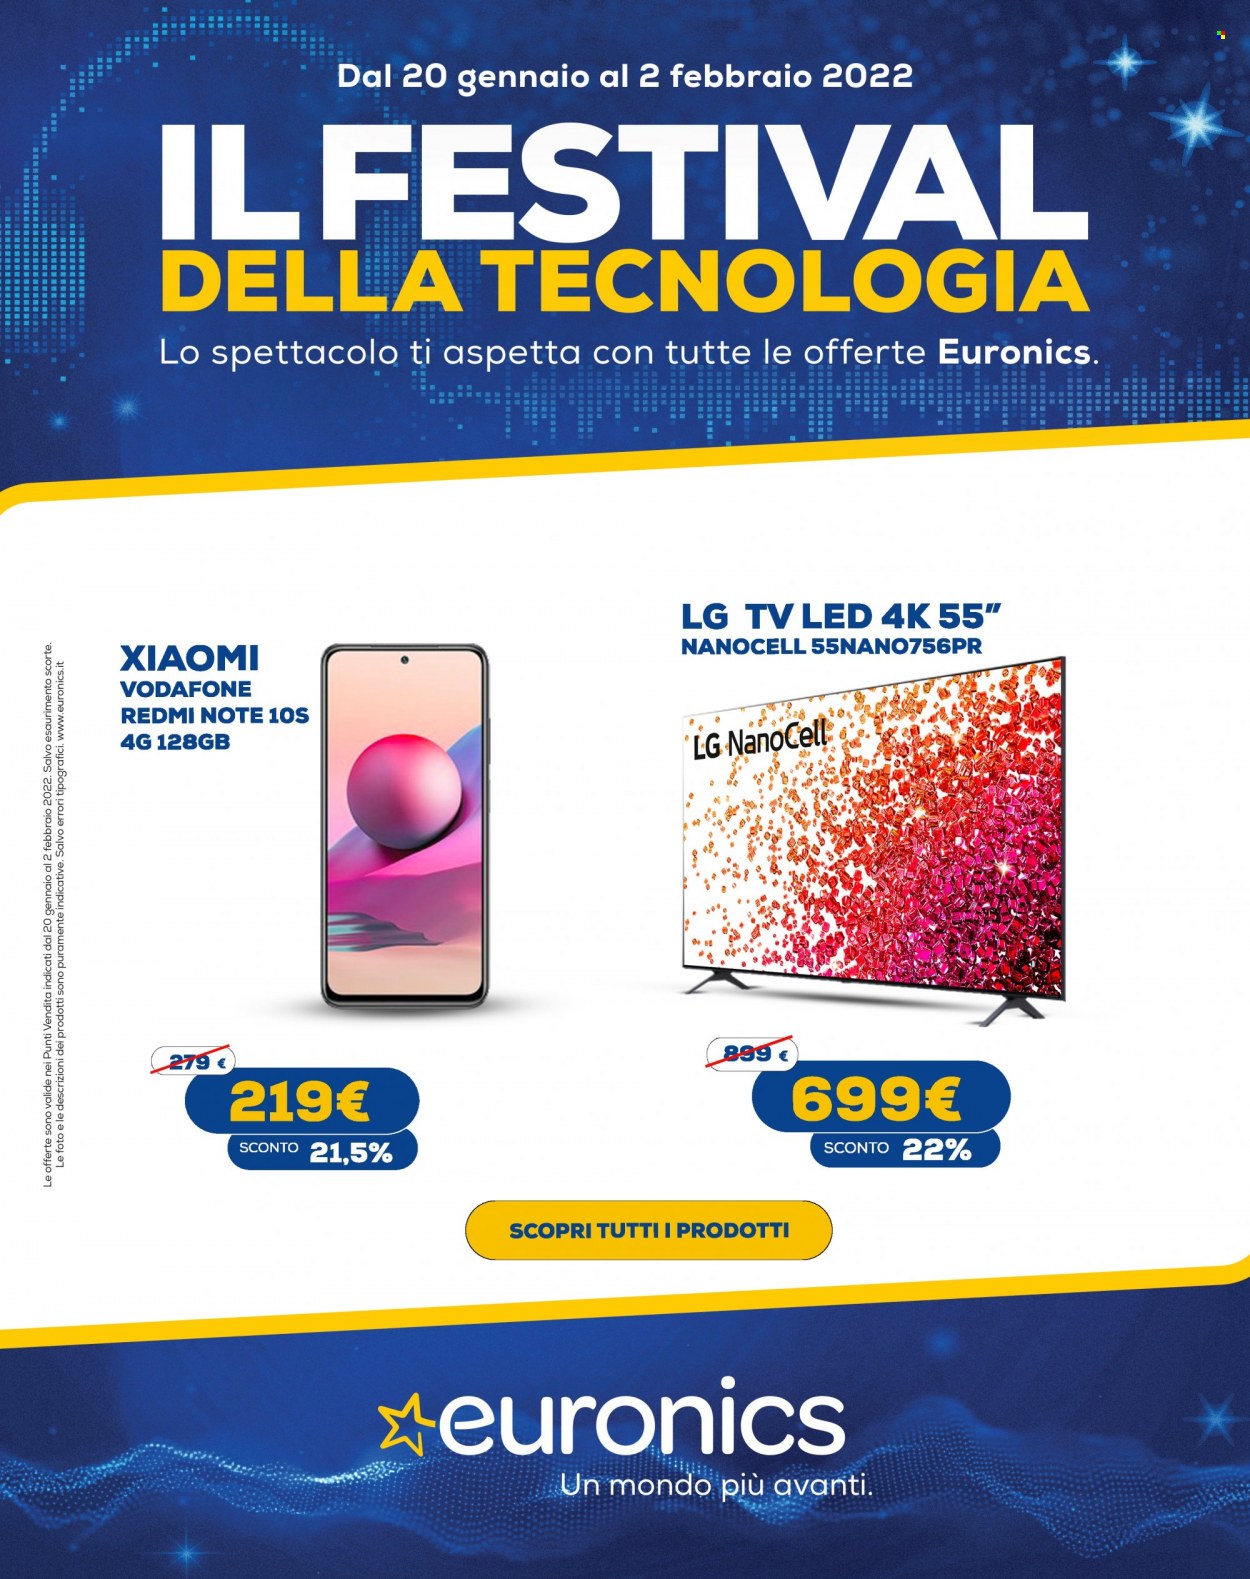 thumbnail - Volantino Euronics - 20/1/2022 - 2/2/2022 - Prodotti in offerta - LG, Xiaomi Redmi, LED TV, televisore. Pagina 1.